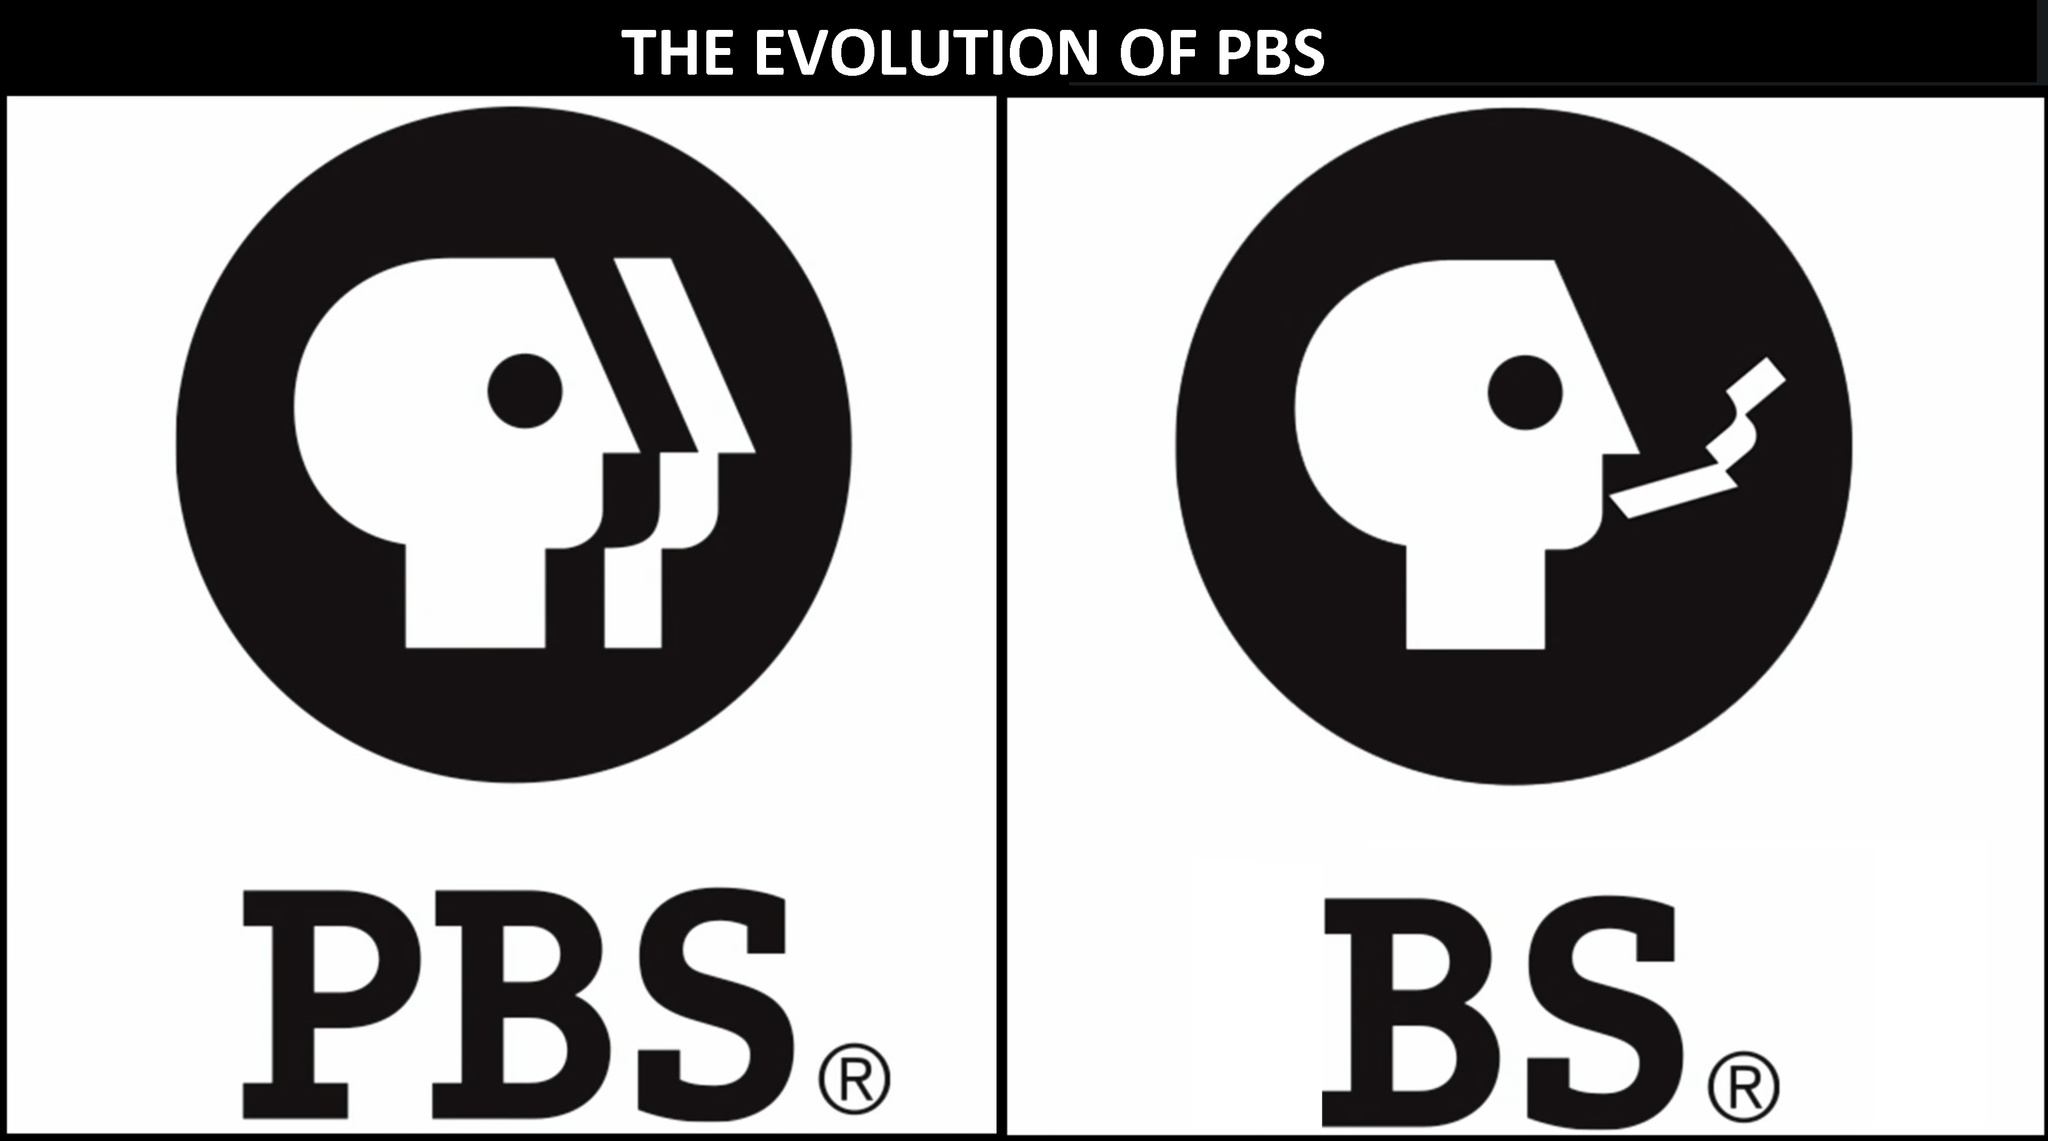 The evolution of PBS - meme